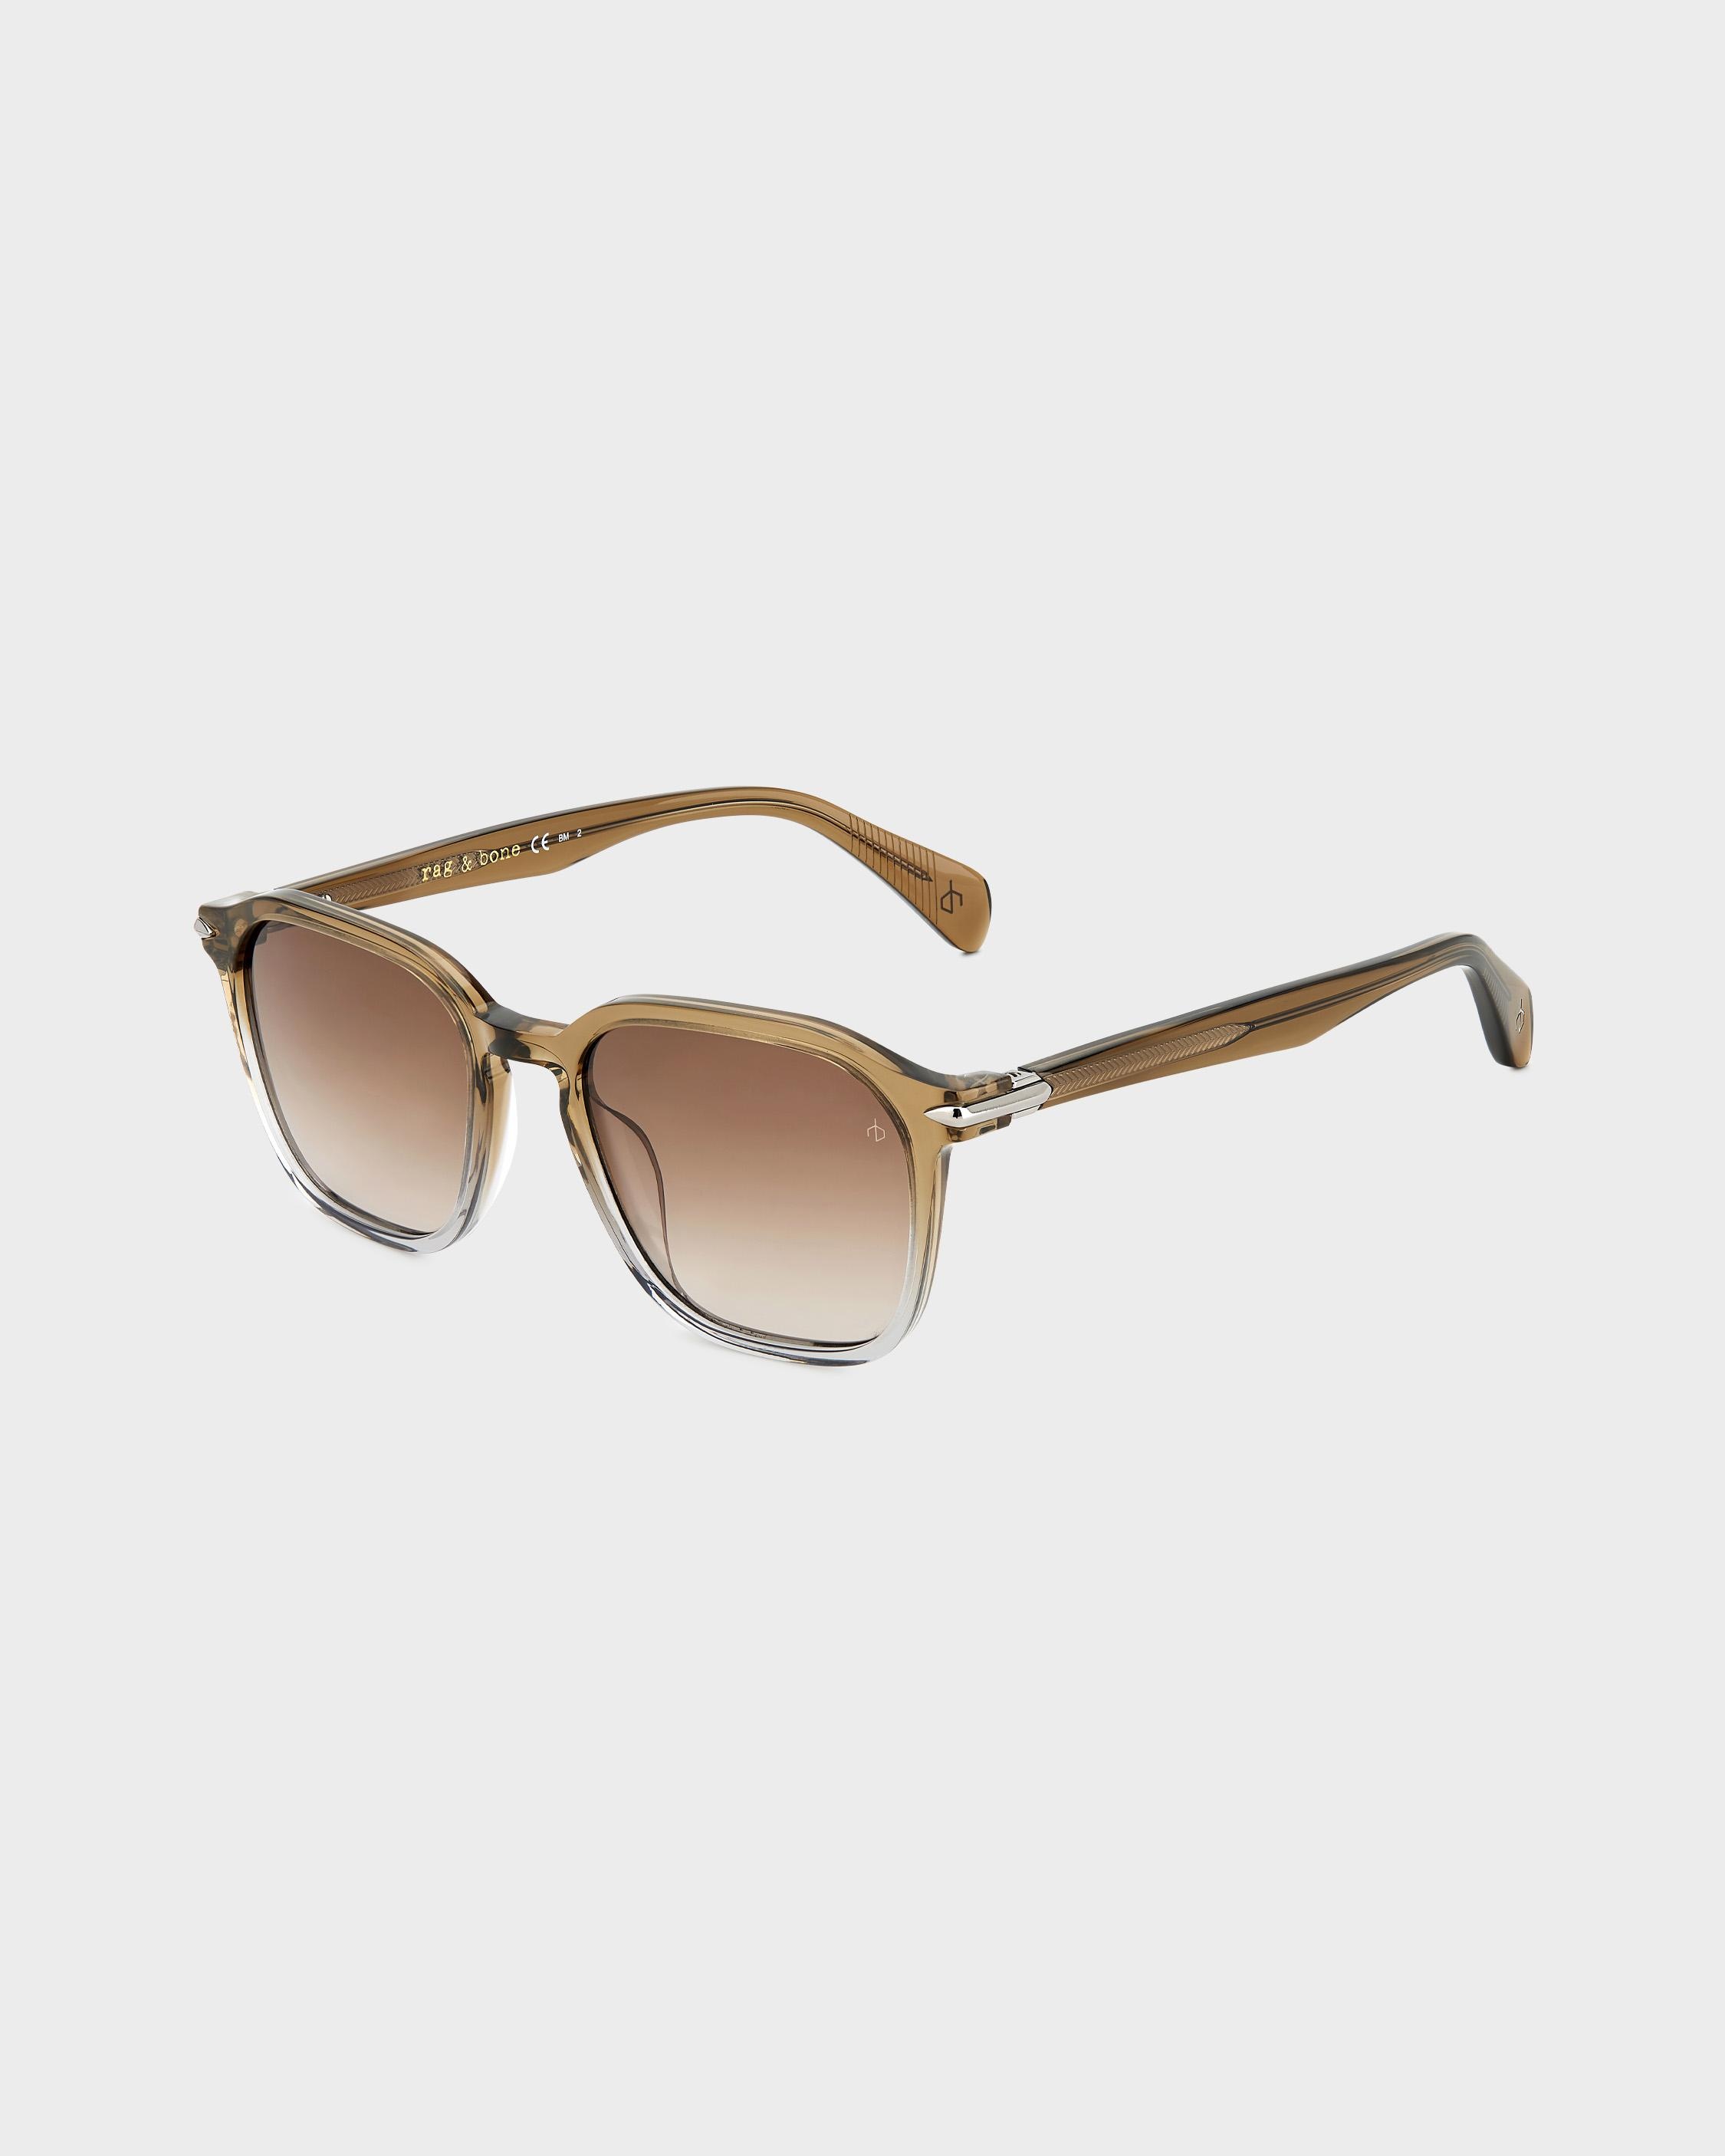 Parker
Square Sunglasses - 1